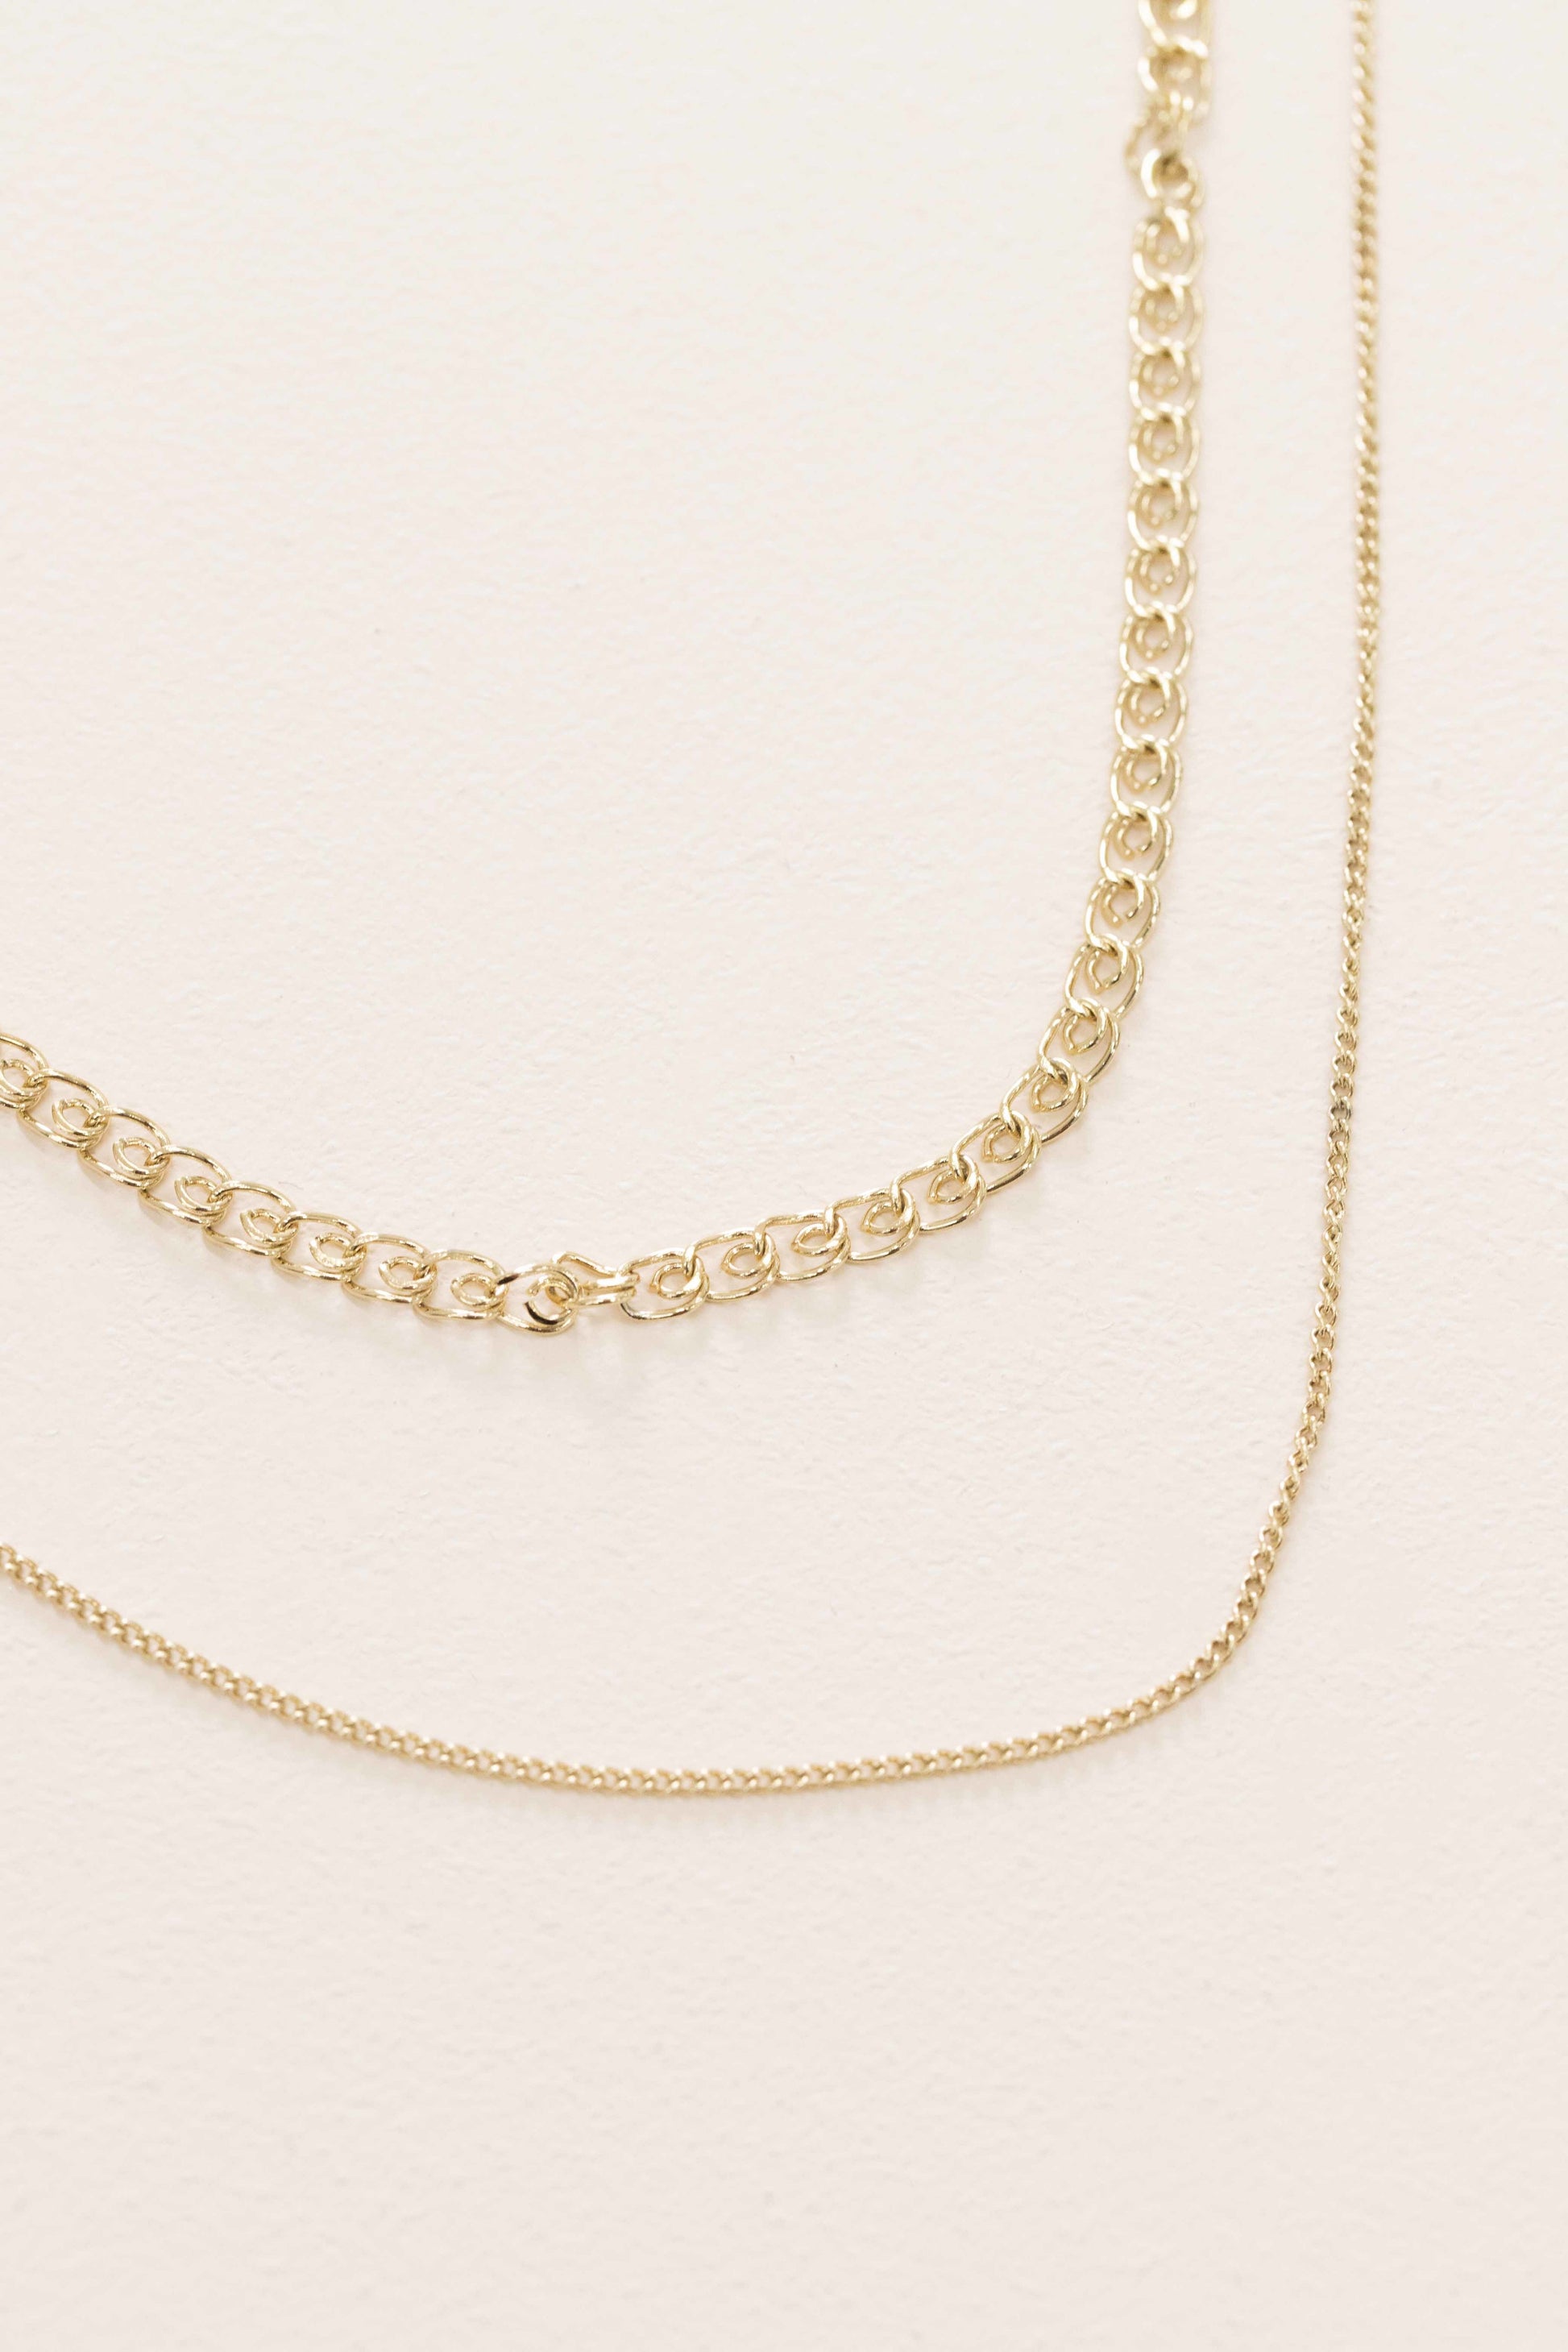 Jewelry | Brand New Necklace Nickel Free Gold Plated | Poshmark